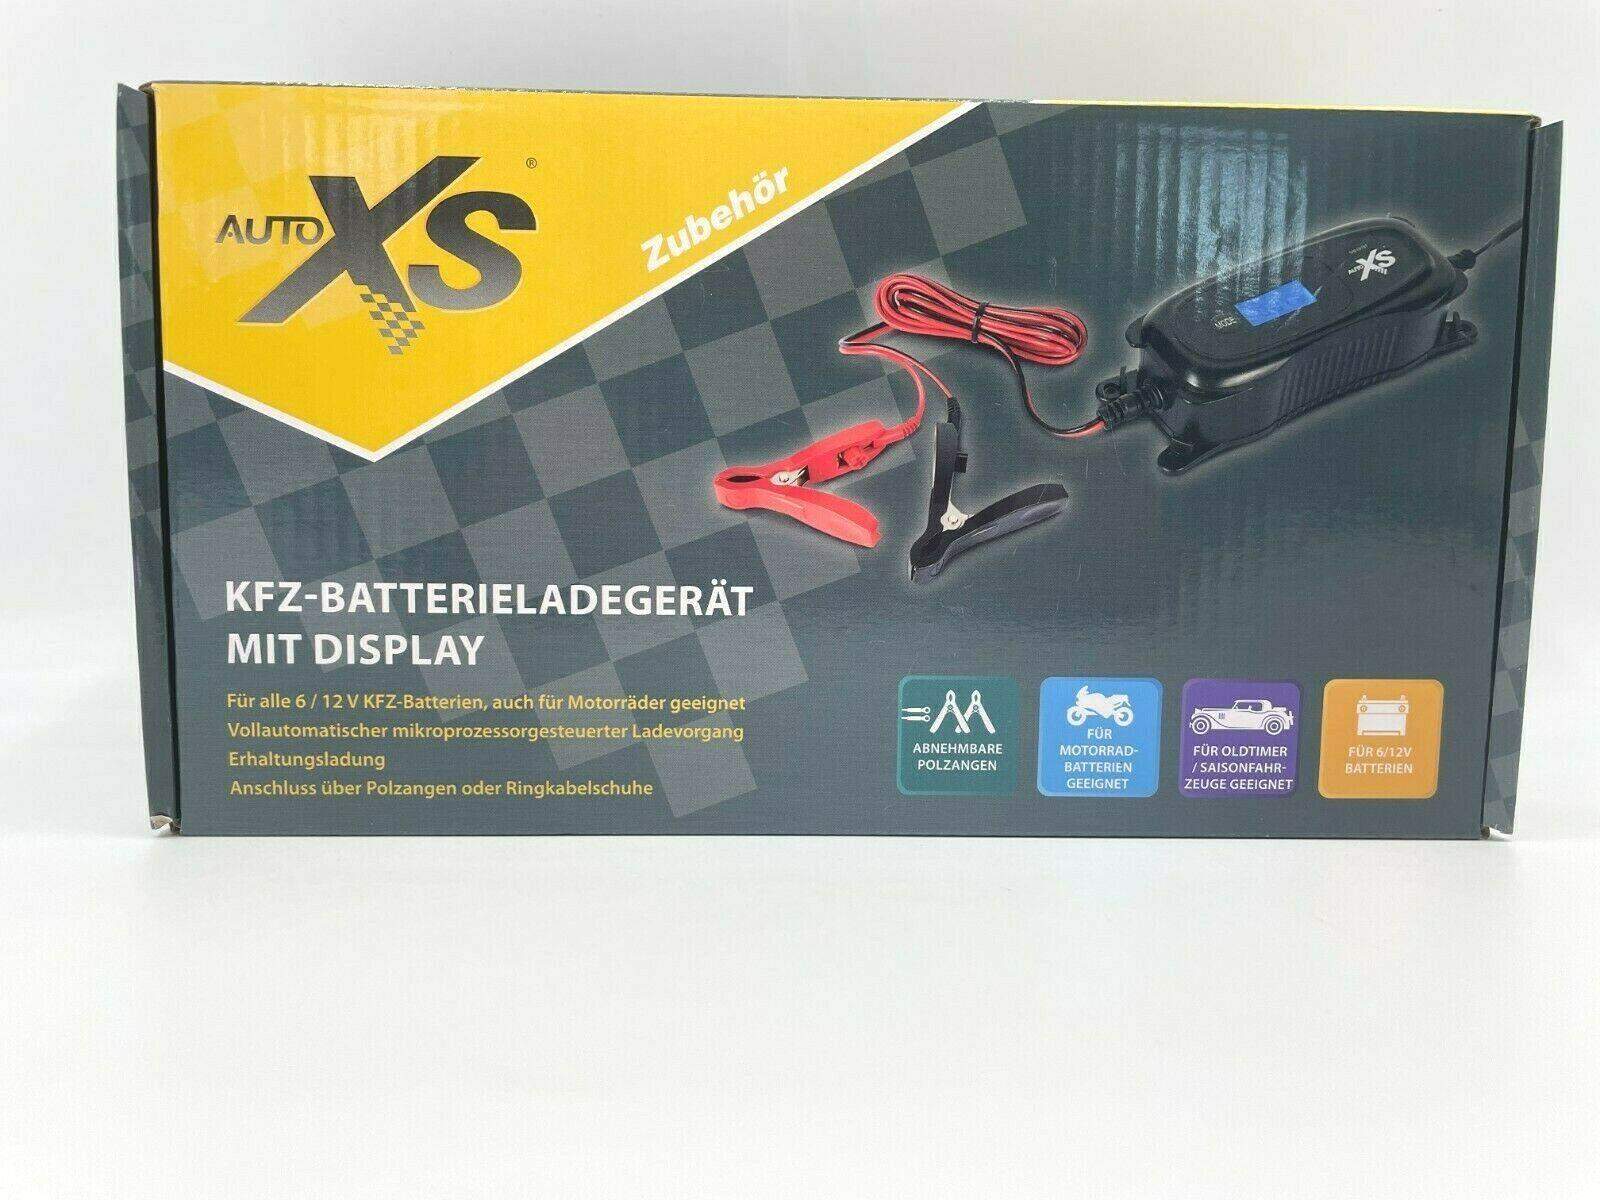 AGM Batterien mit Auto-XS Kfz-Batterie-Ladegerät Laden (Aldi